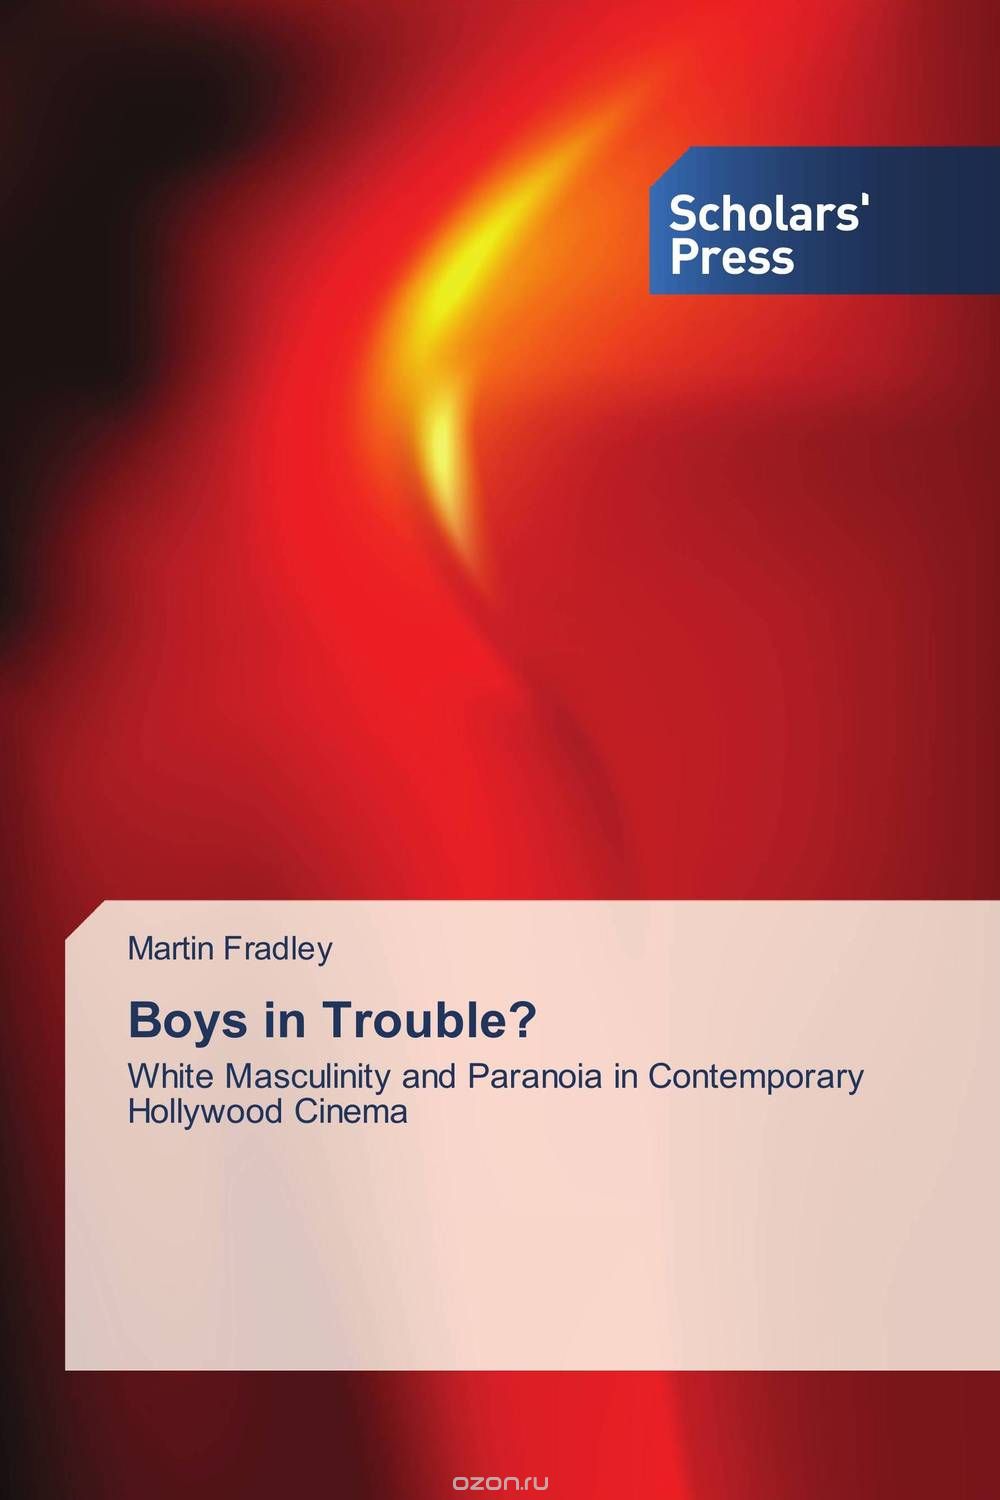 Скачать книгу "Boys in Trouble?"